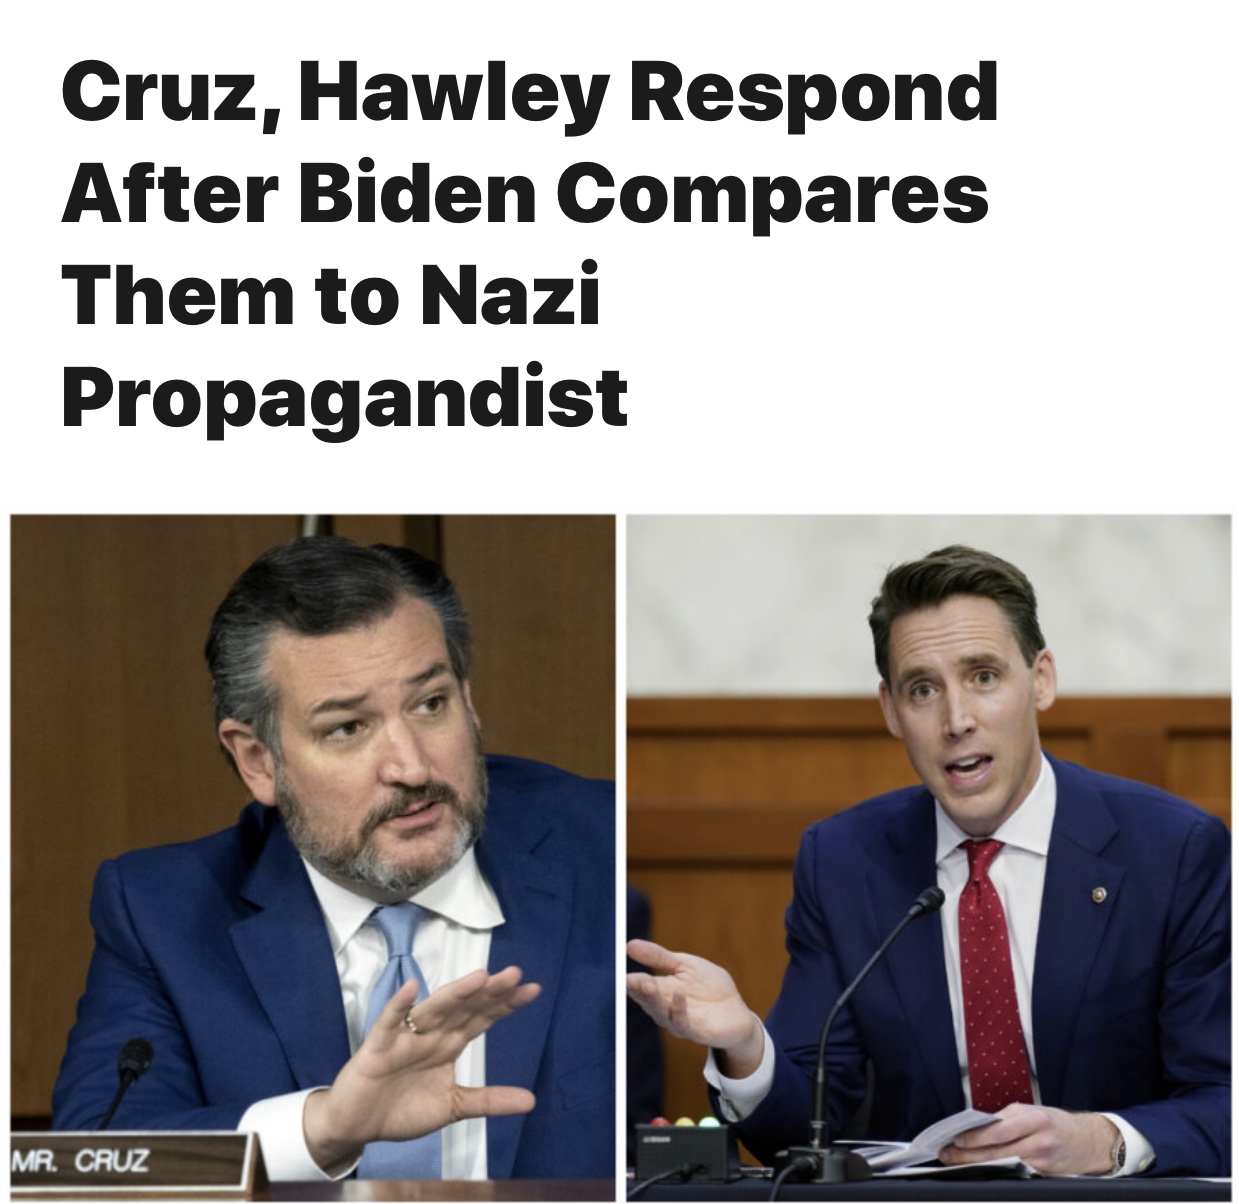 Cruz, Hawley Respond After Biden Compares Them to Nazi Propagandist